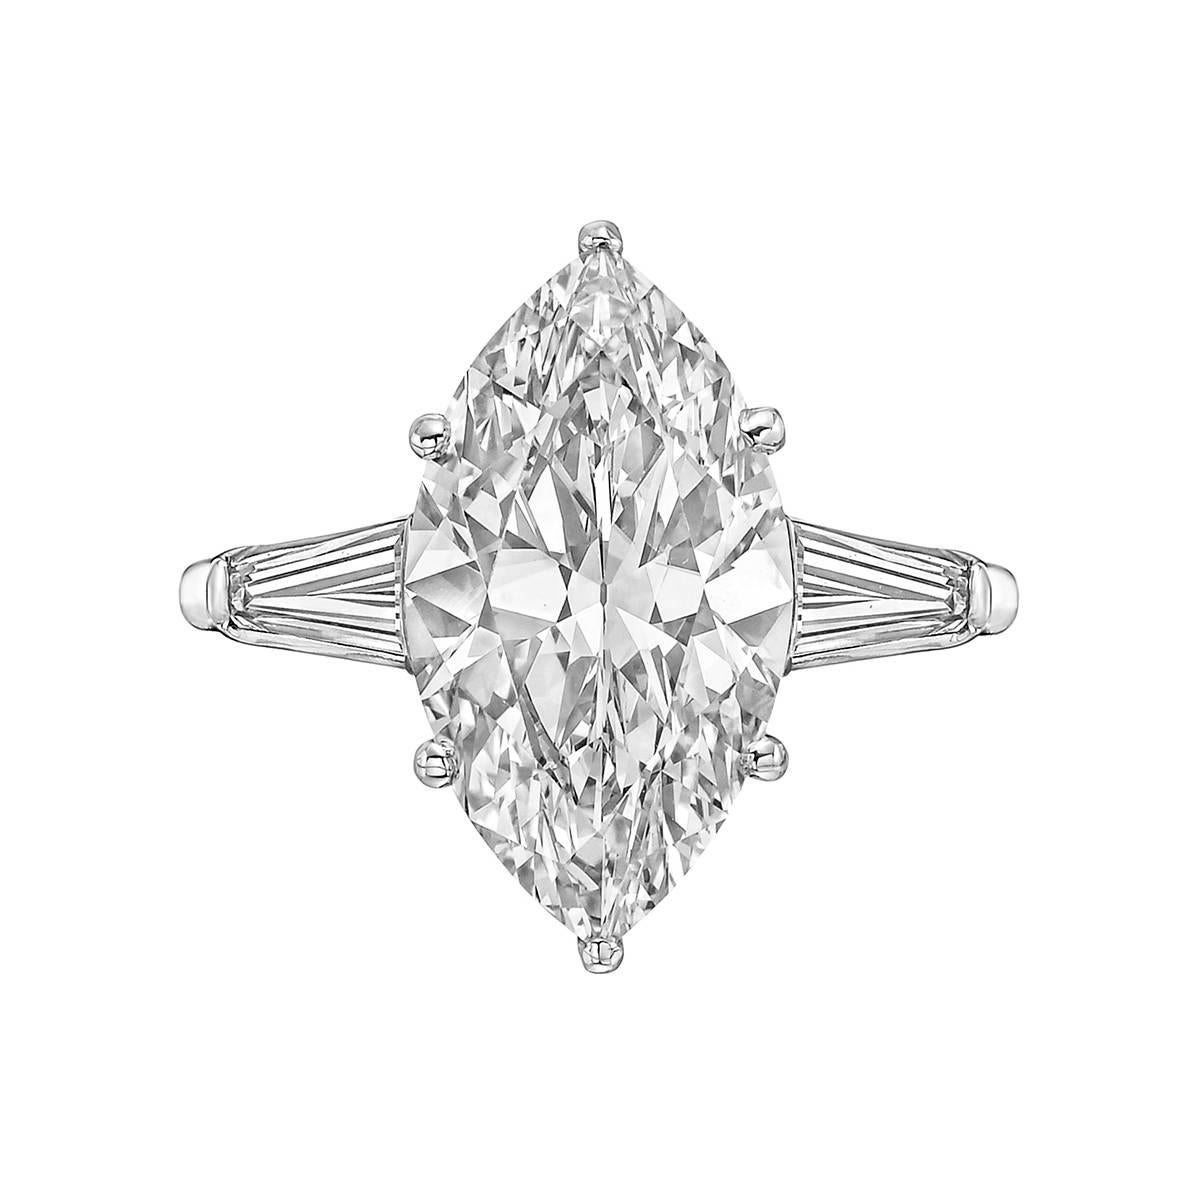 5.09 Carat Marquise-Cut Diamond Engagement Ring